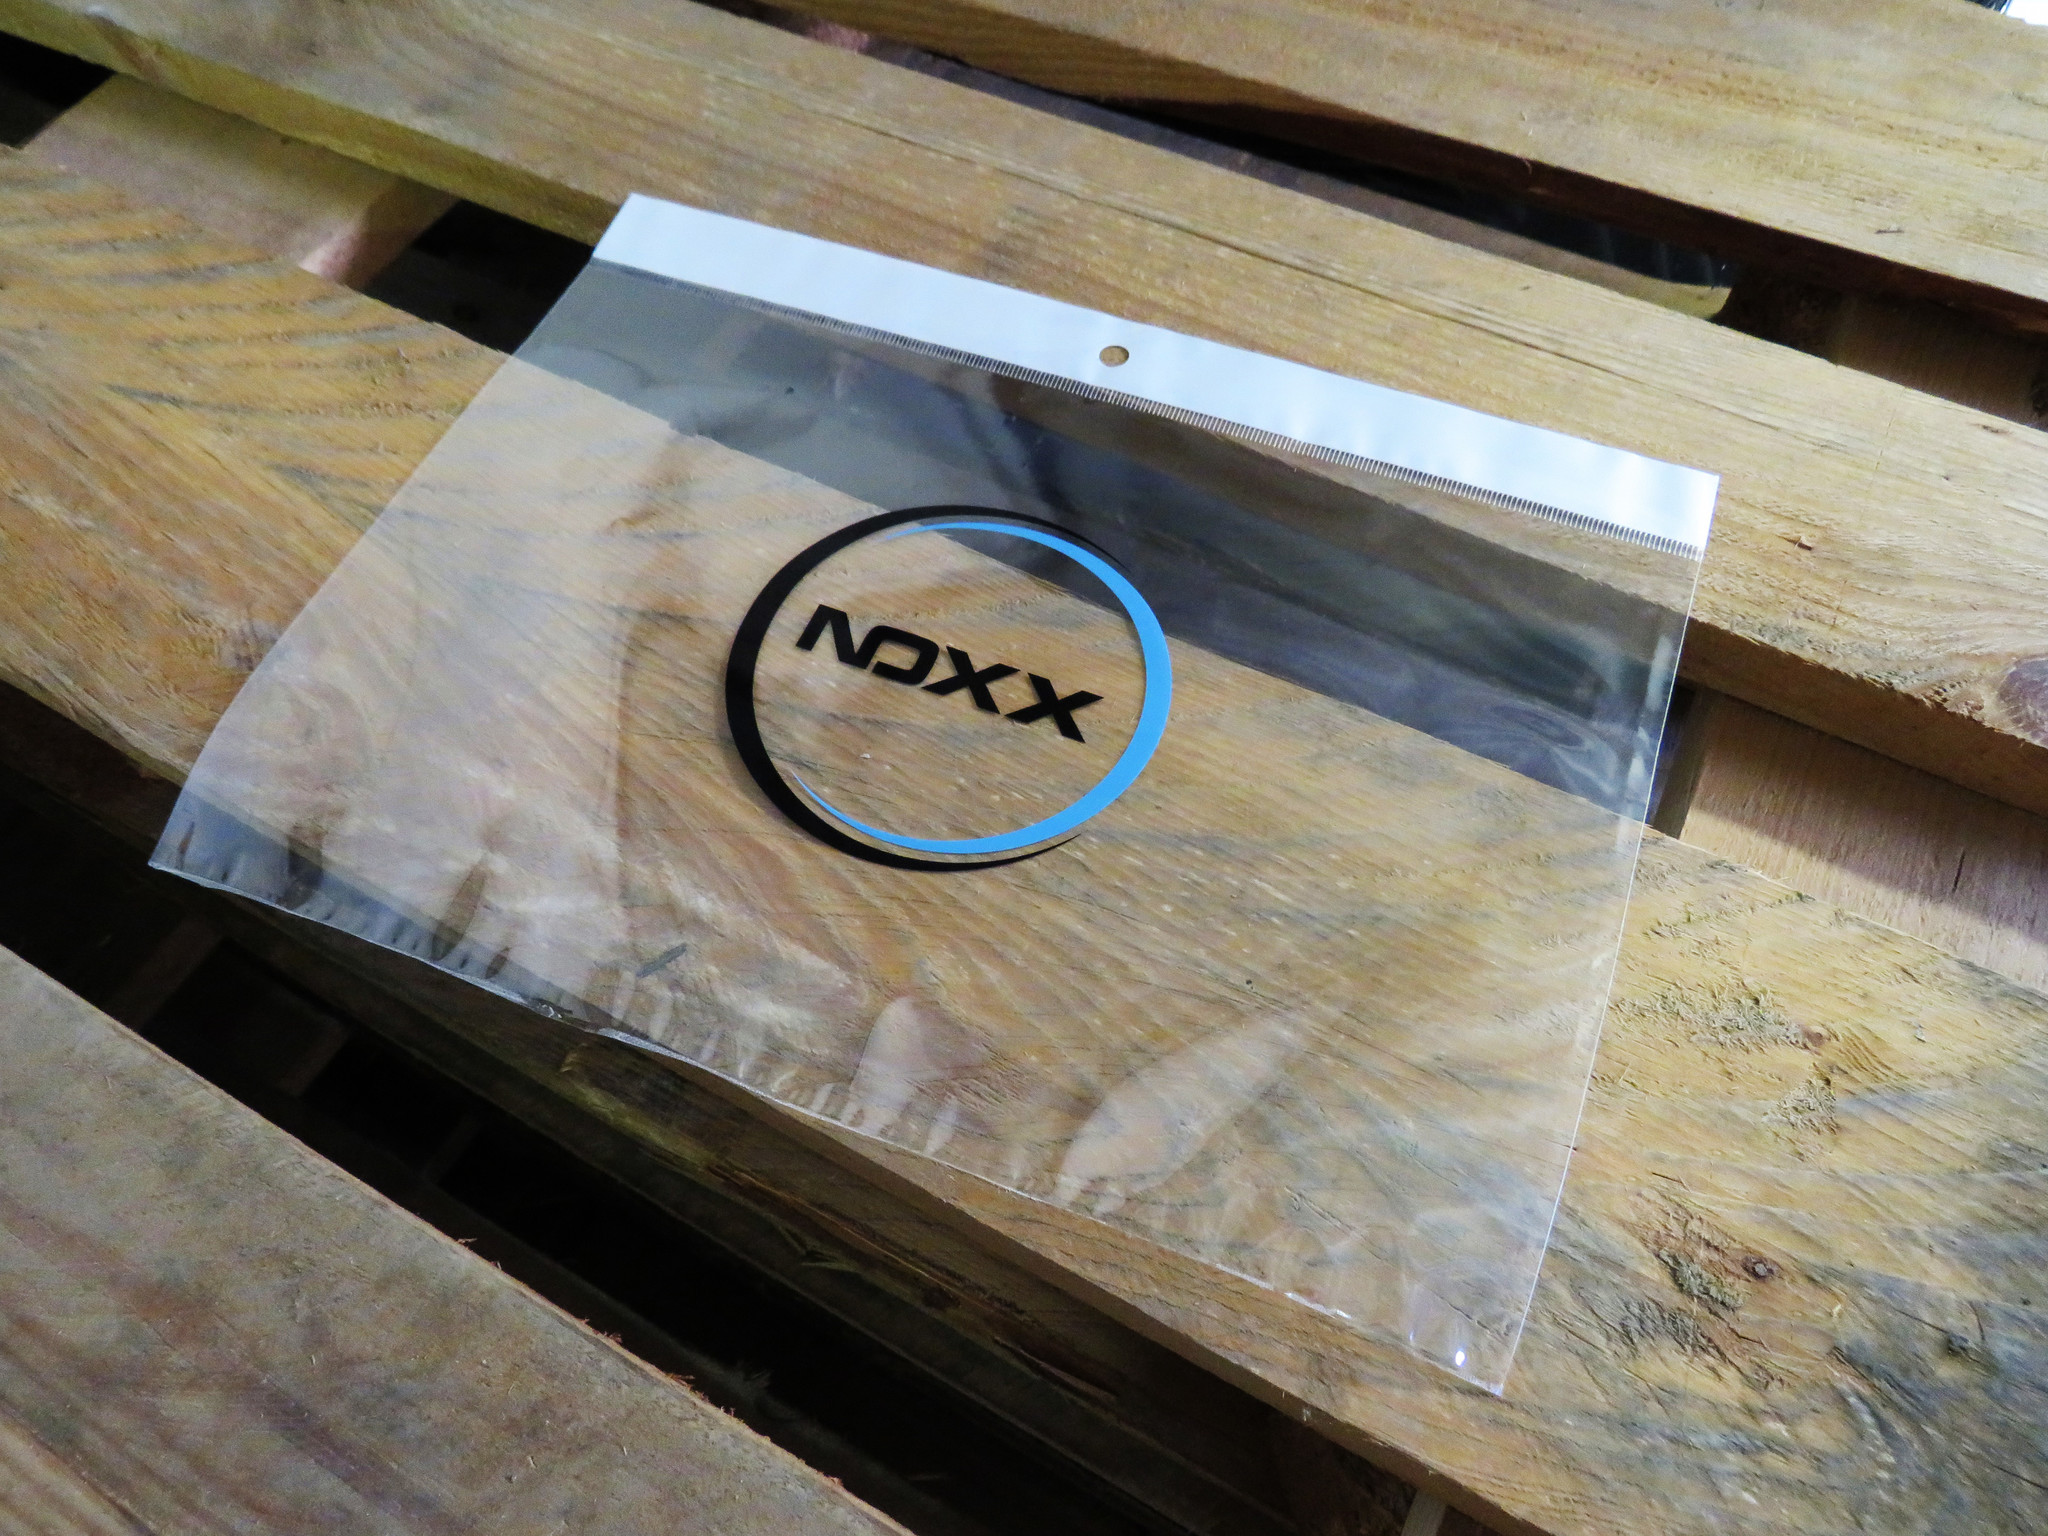 NoXx Lenovo Tab P12 Pro Screenprotector Bescherm Glas Screen Protector